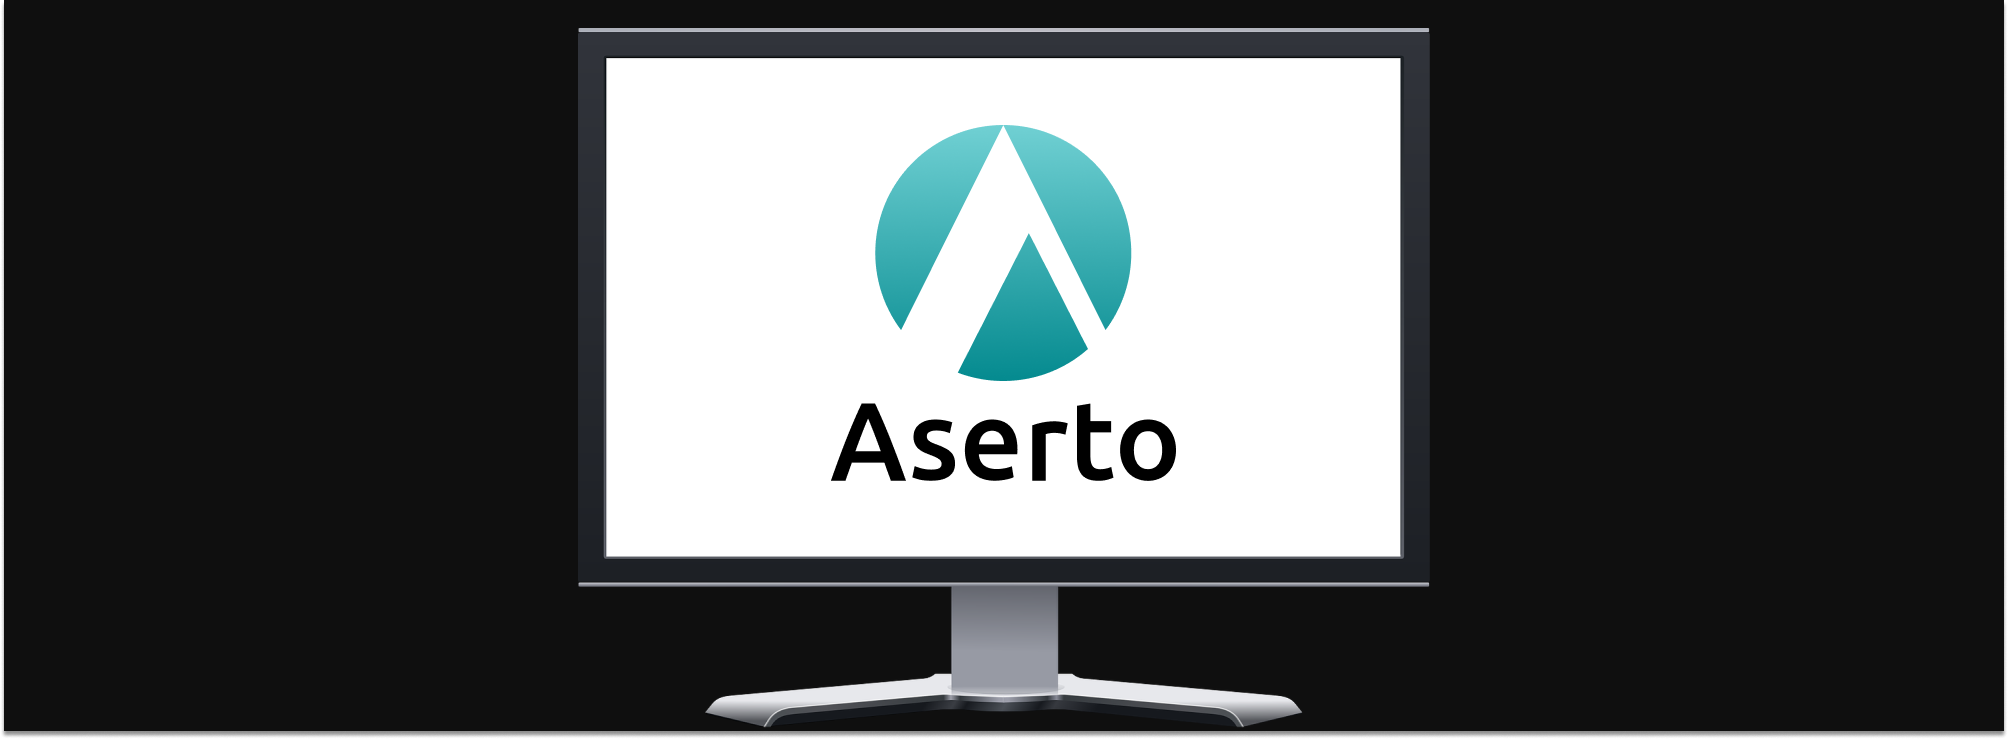 Aserto fine-grained access control platform